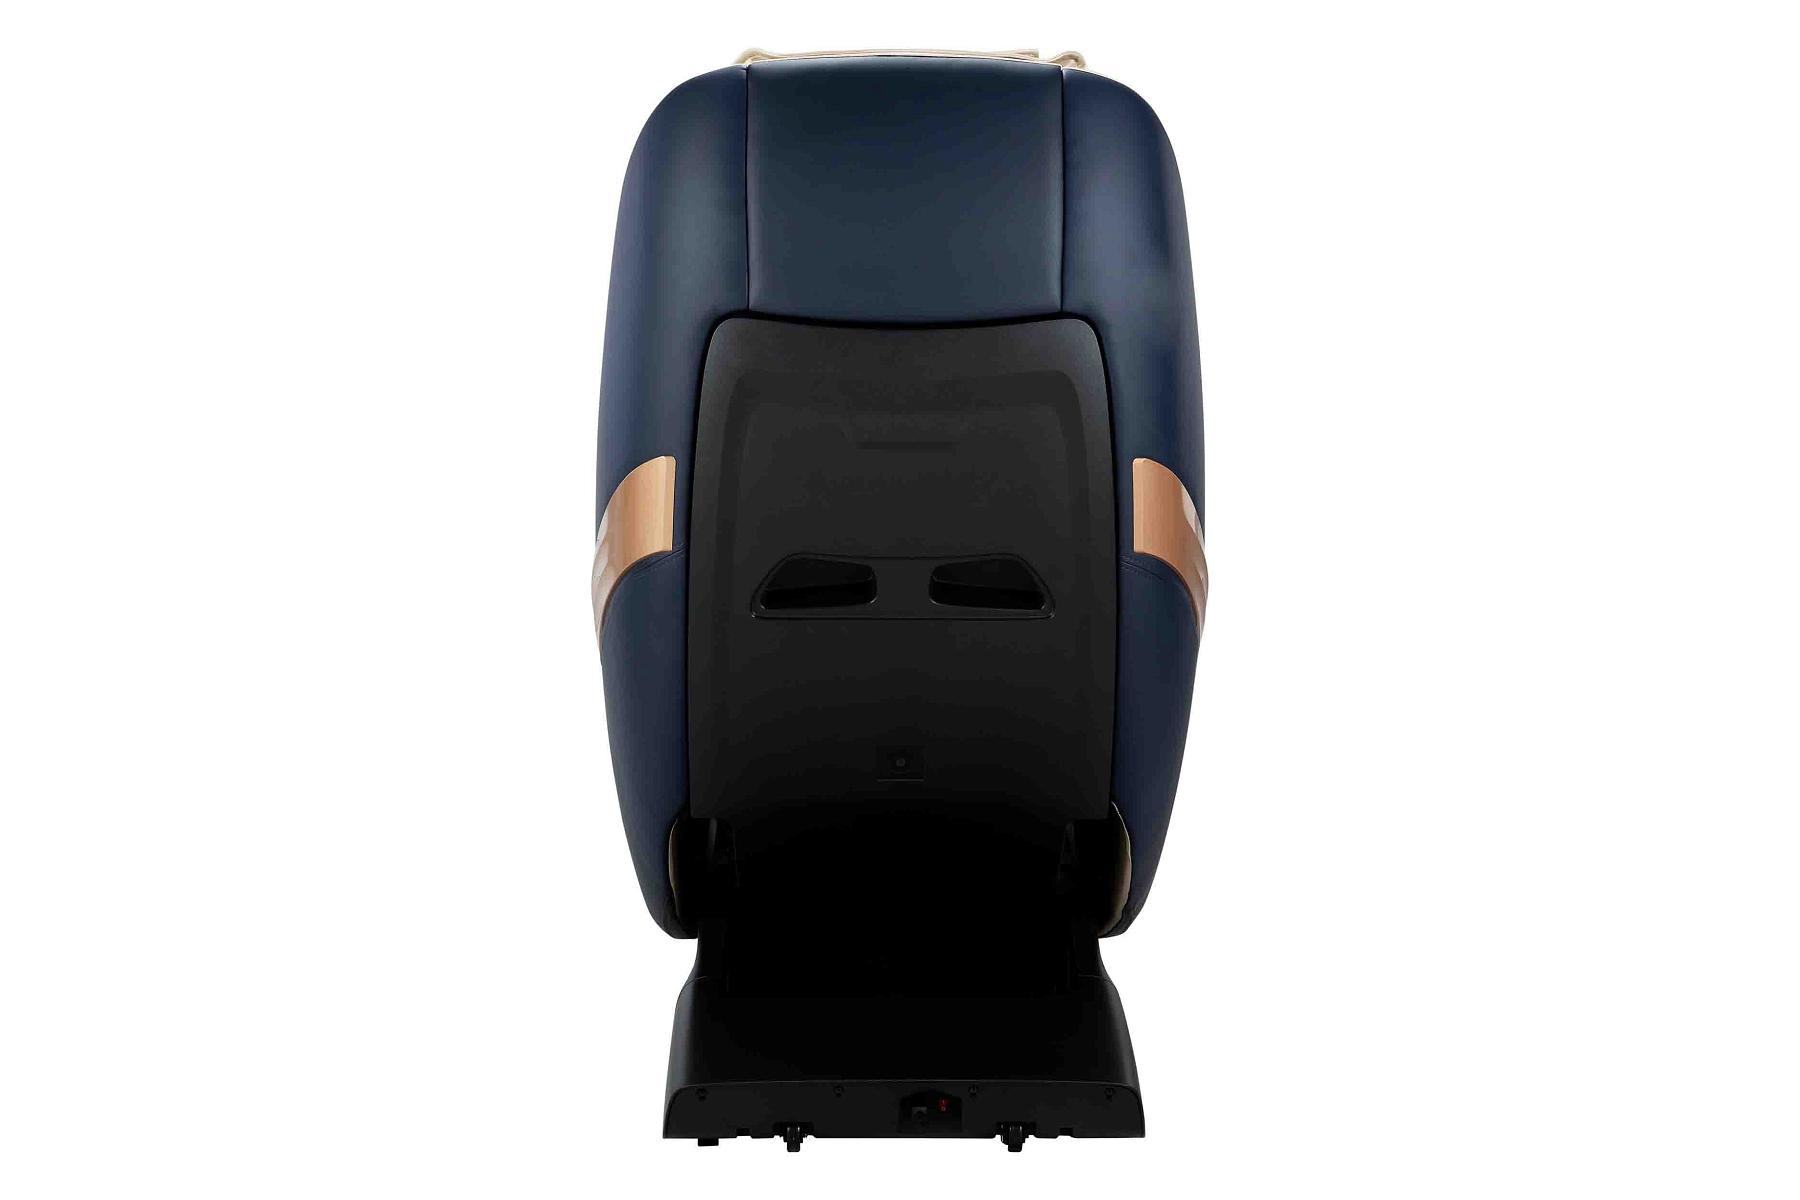 Массажное кресло iMassage Hybrid Blue/Beige